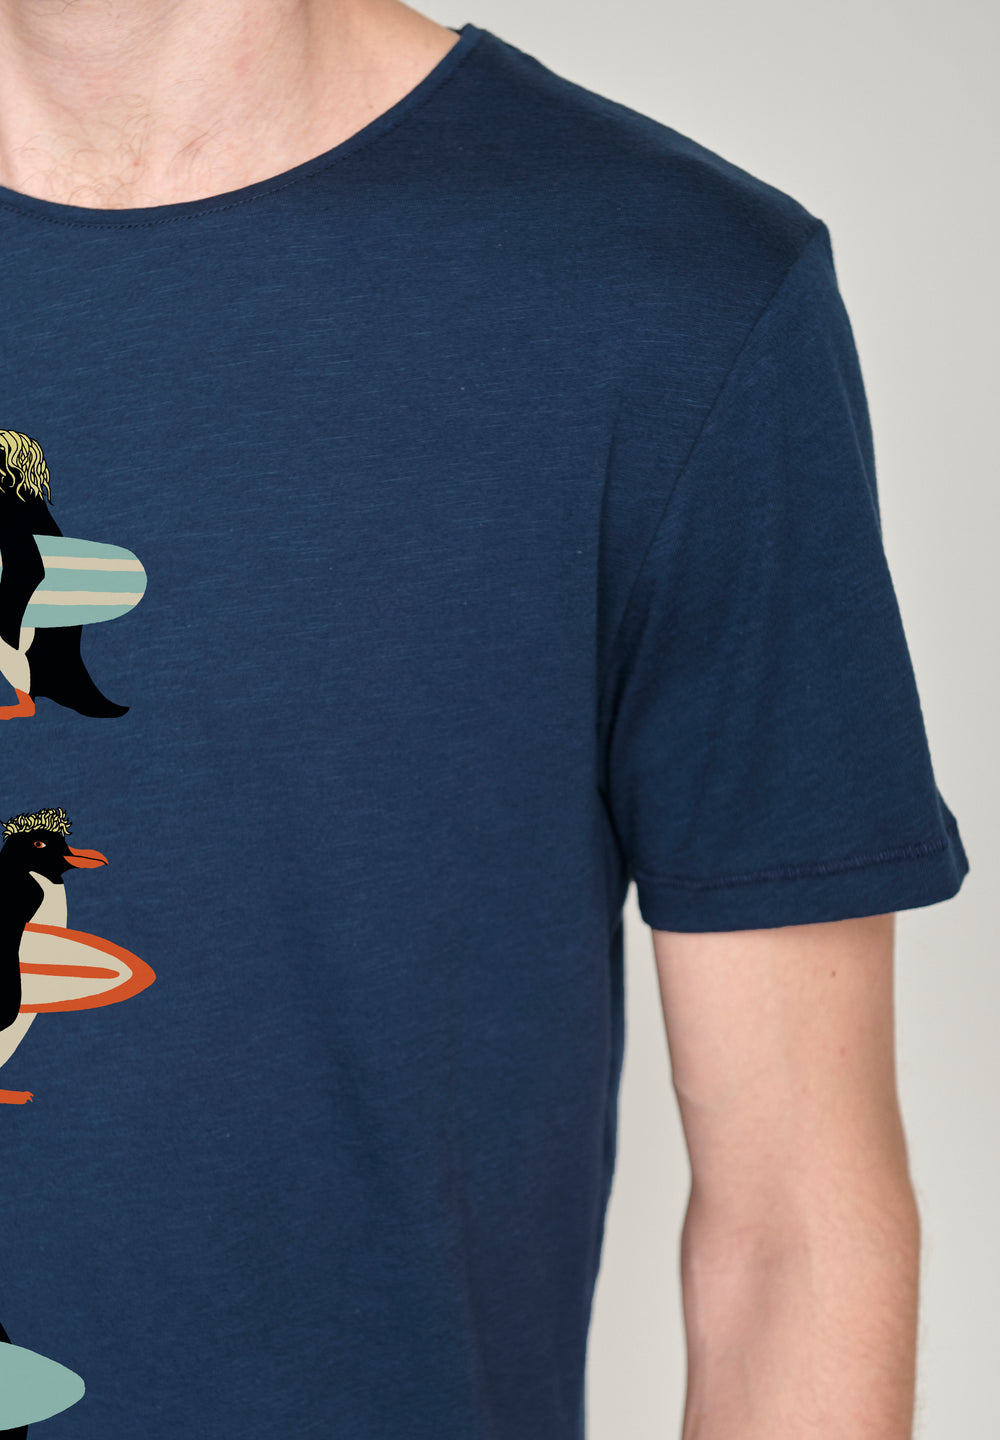 Greenbomb T-Shirt Spice - Penguins Surf